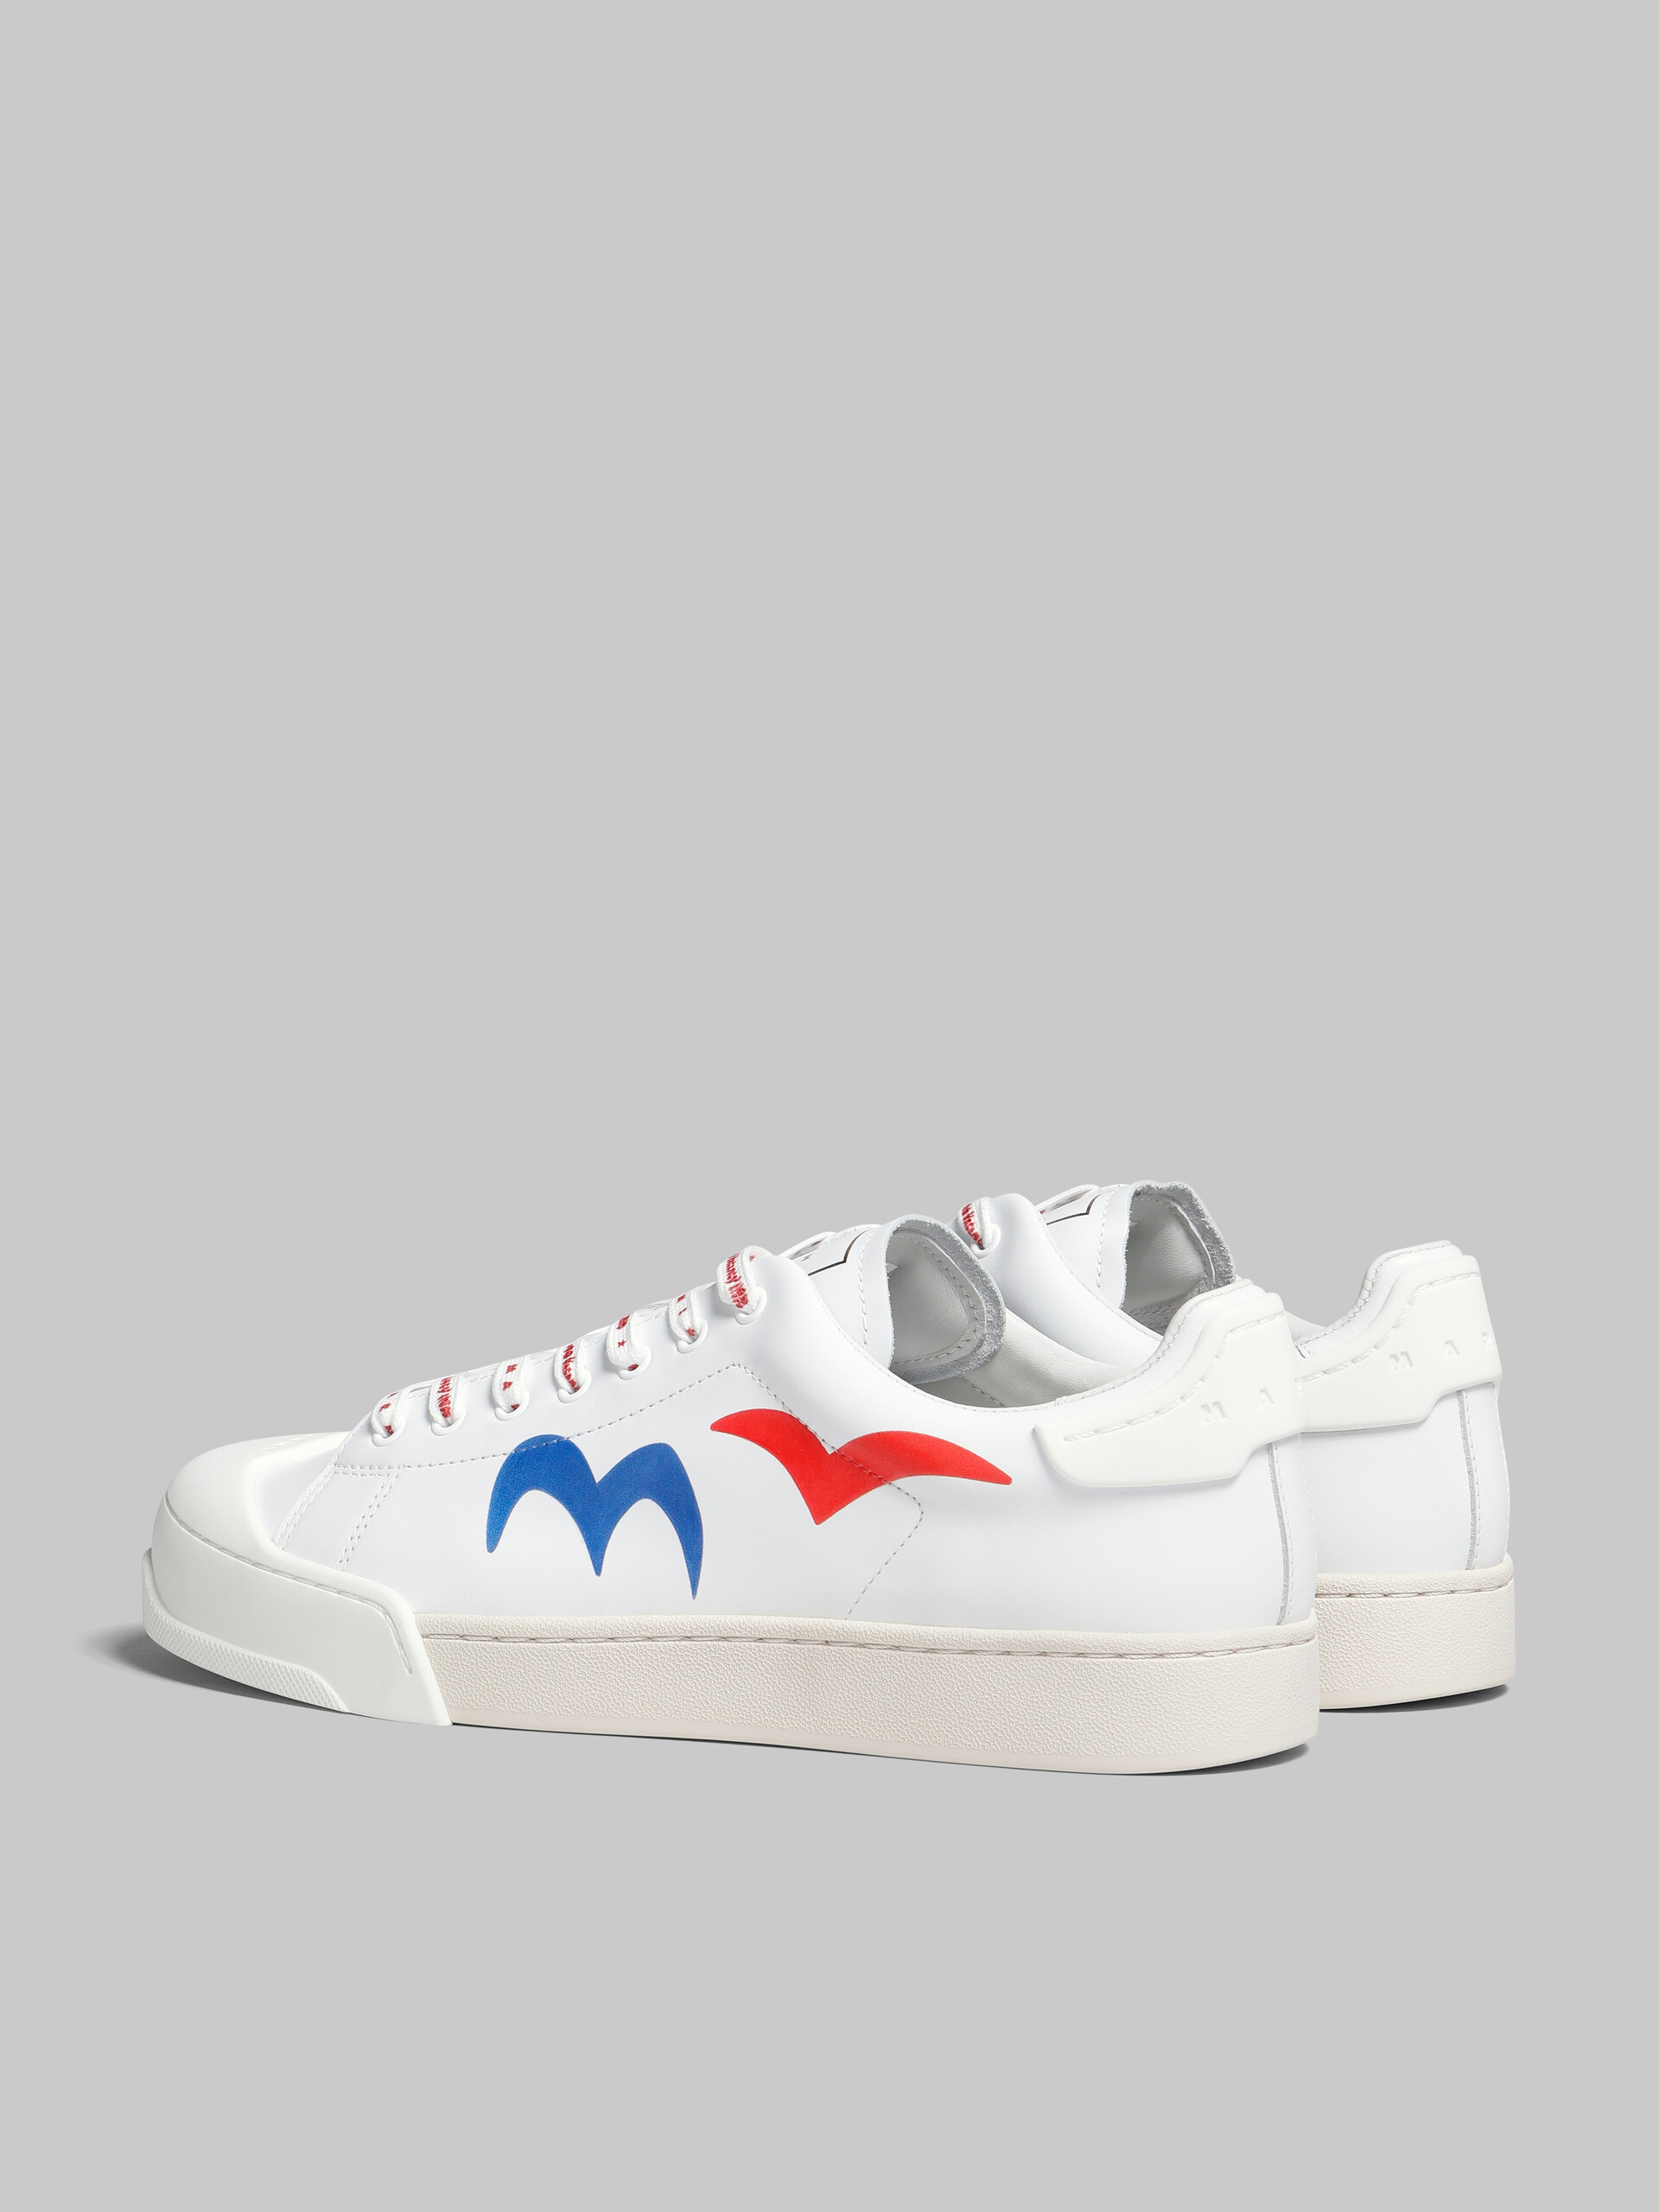 Marni x No Vacancy Inn - Dada Bumper sneaker in white printed leather - Sneakers - Image 3